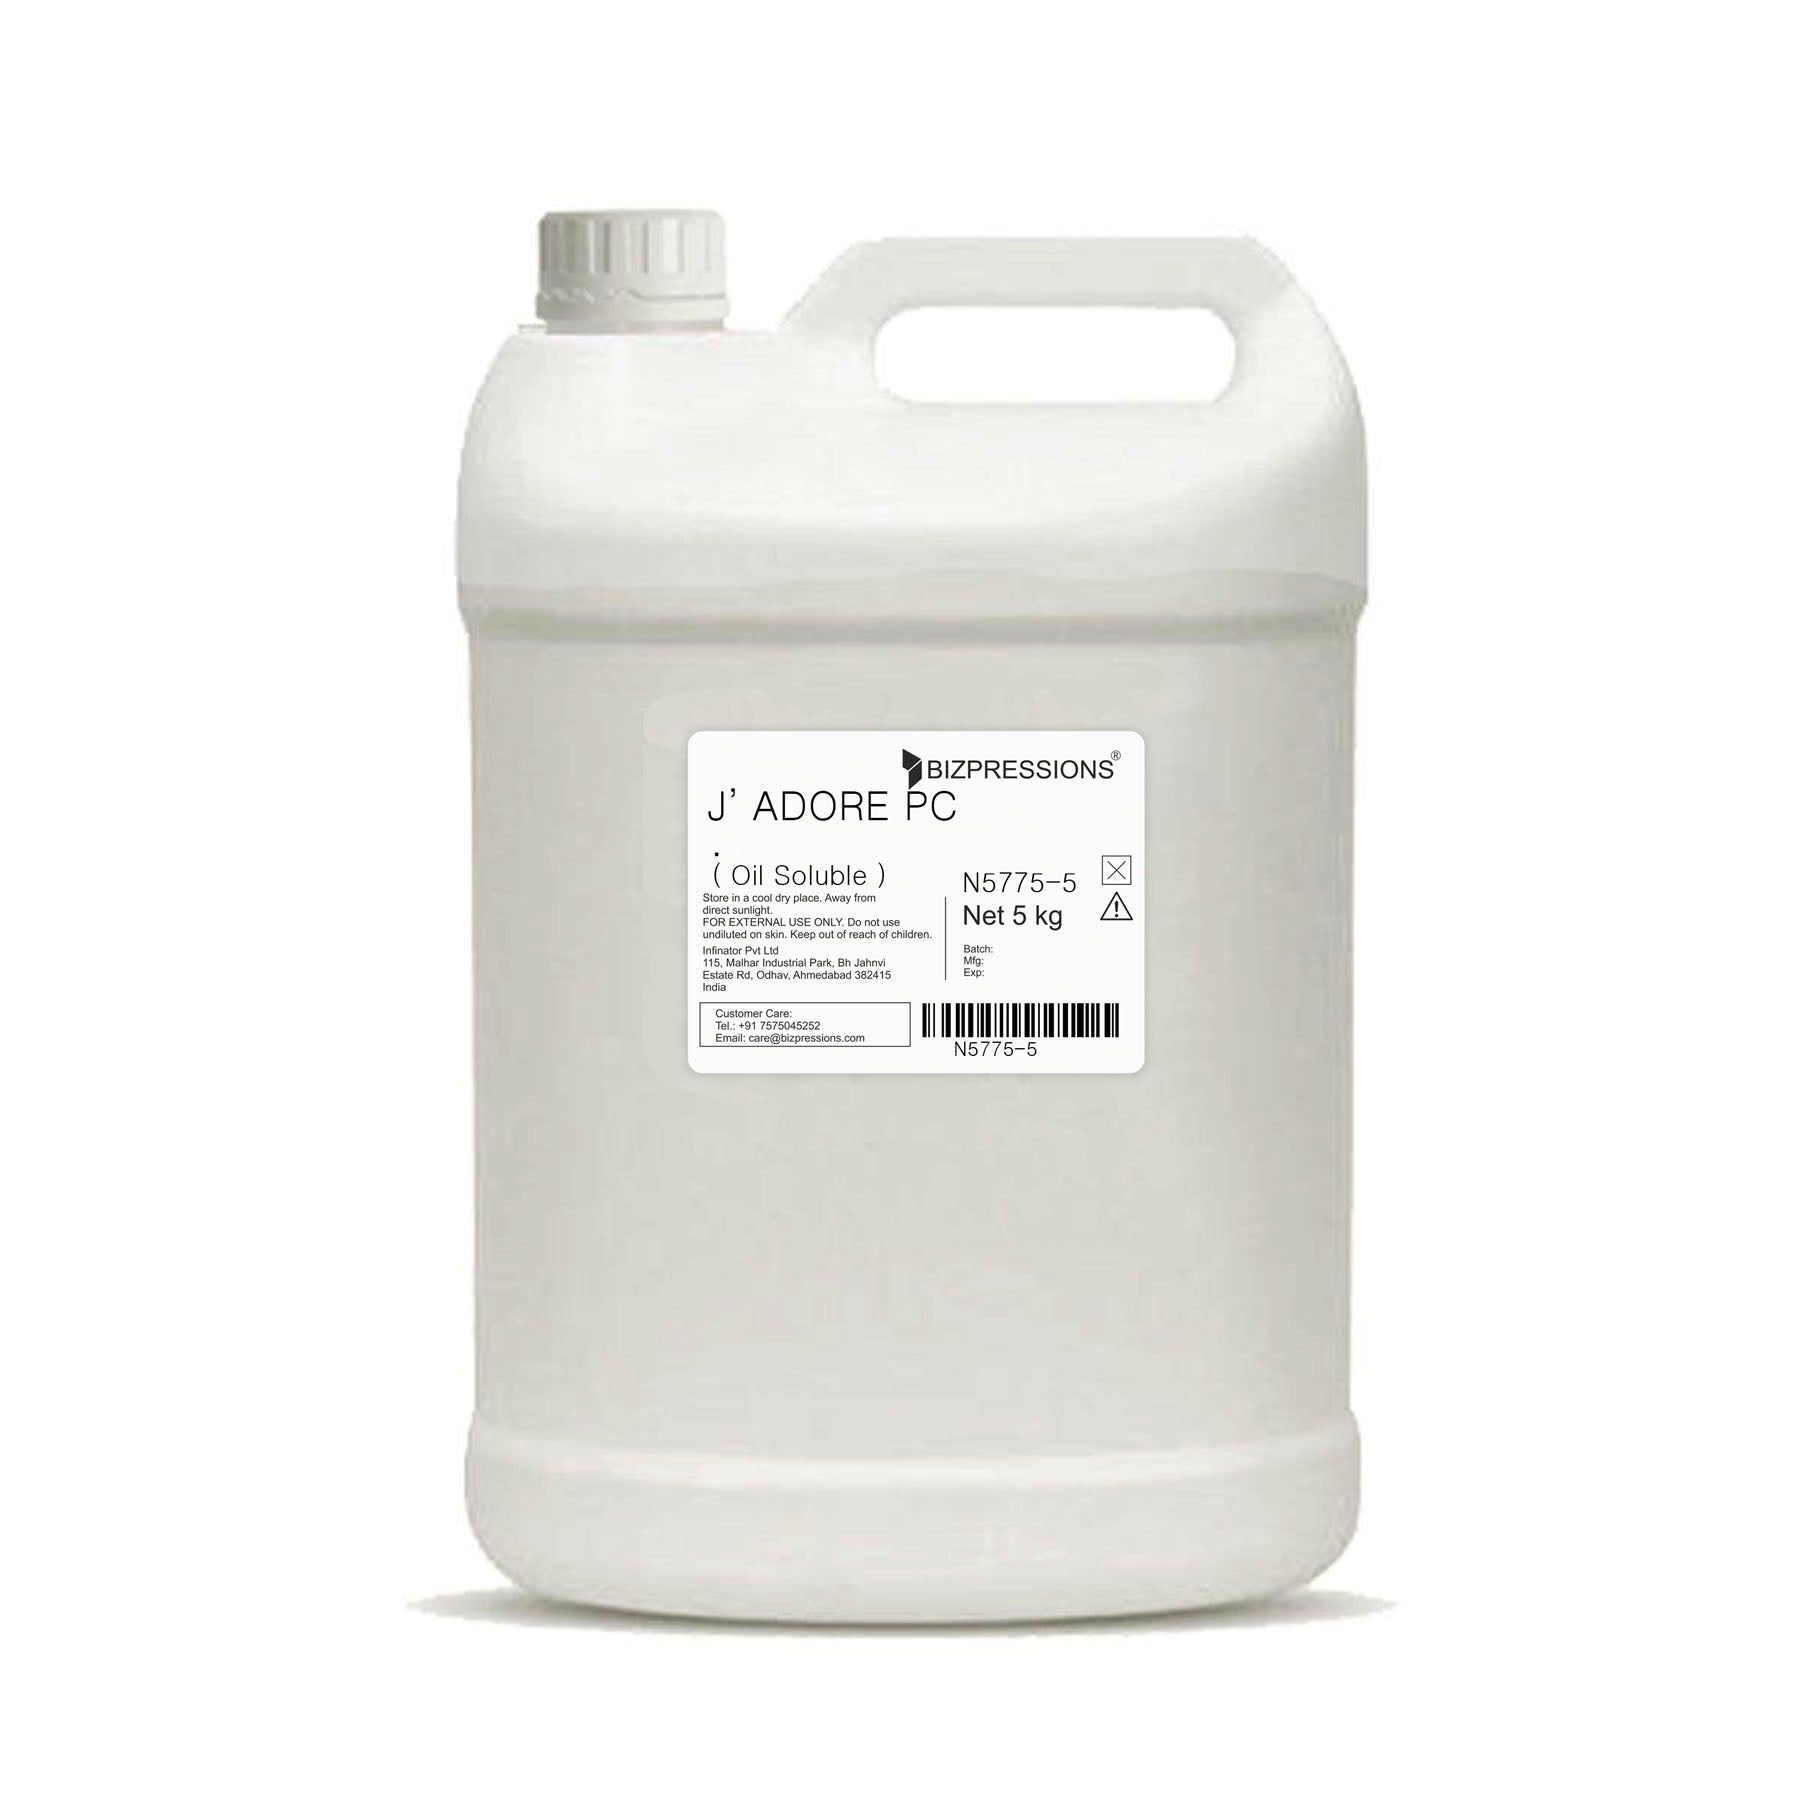 J’ ADORE PC - Fragrance ( Oil Soluble ) - 5 kg